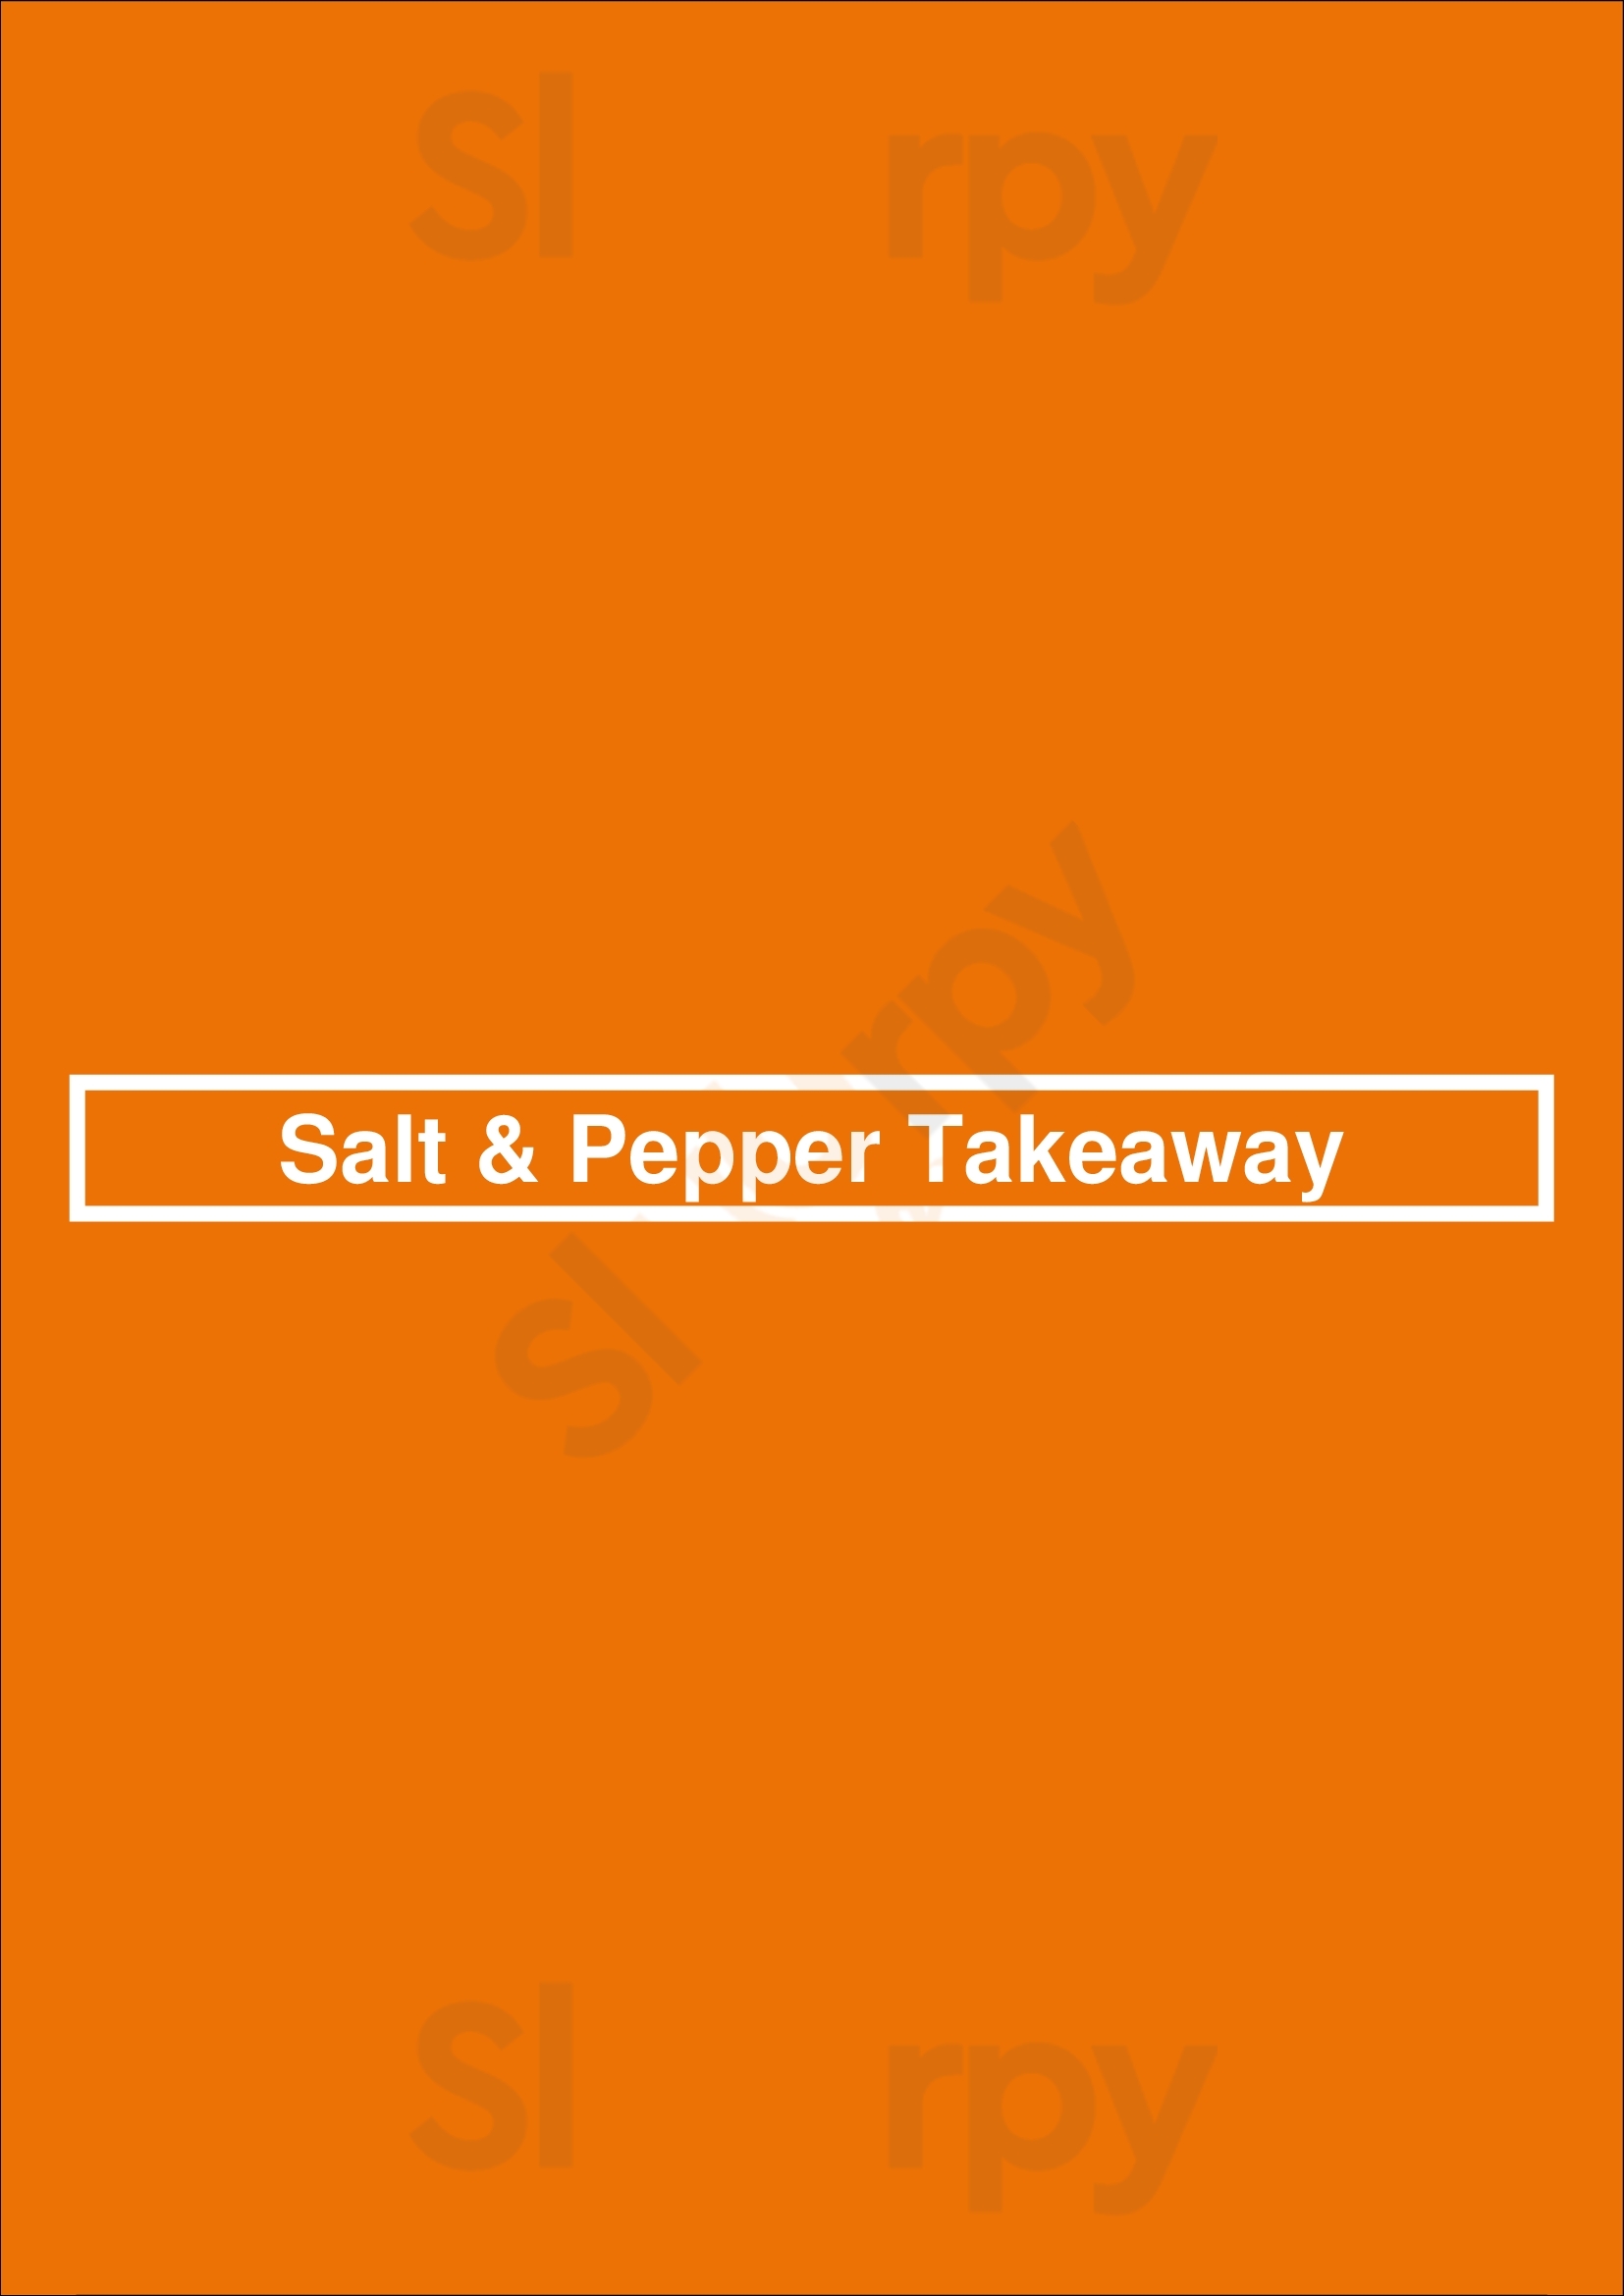 Salt & Pepper Takeaway Glasgow Menu - 1